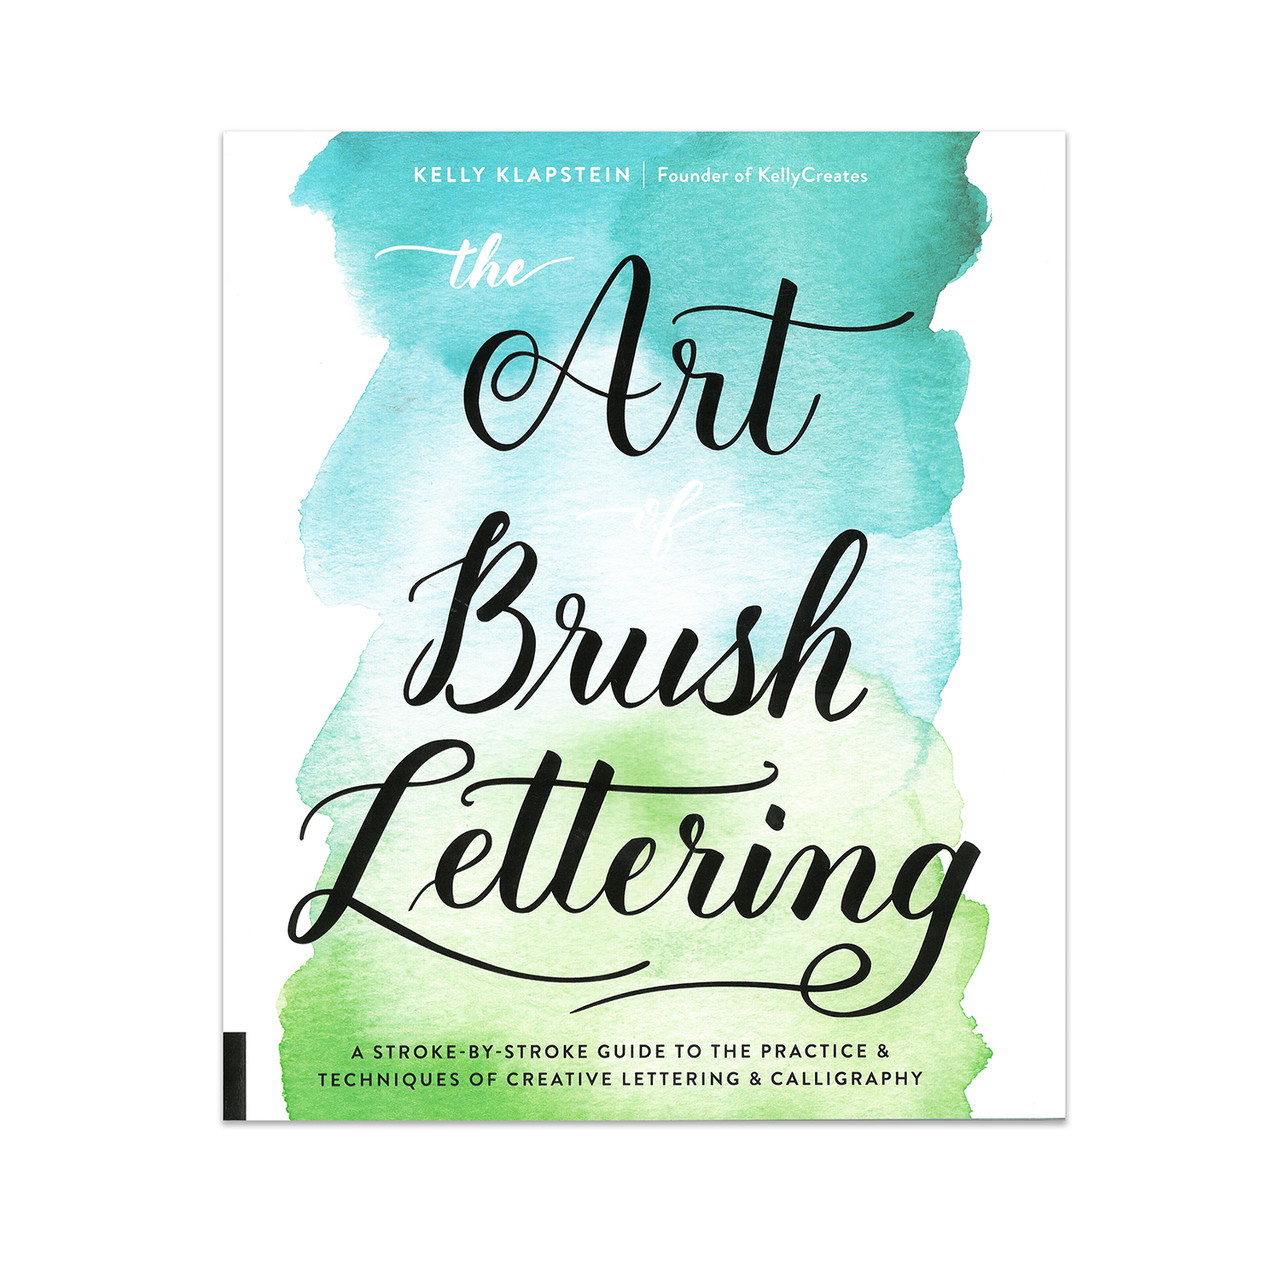 The Beginner's Guide to Brush Lettering: Part II  Lettering guide, Brush  pen lettering, Lettering alphabet